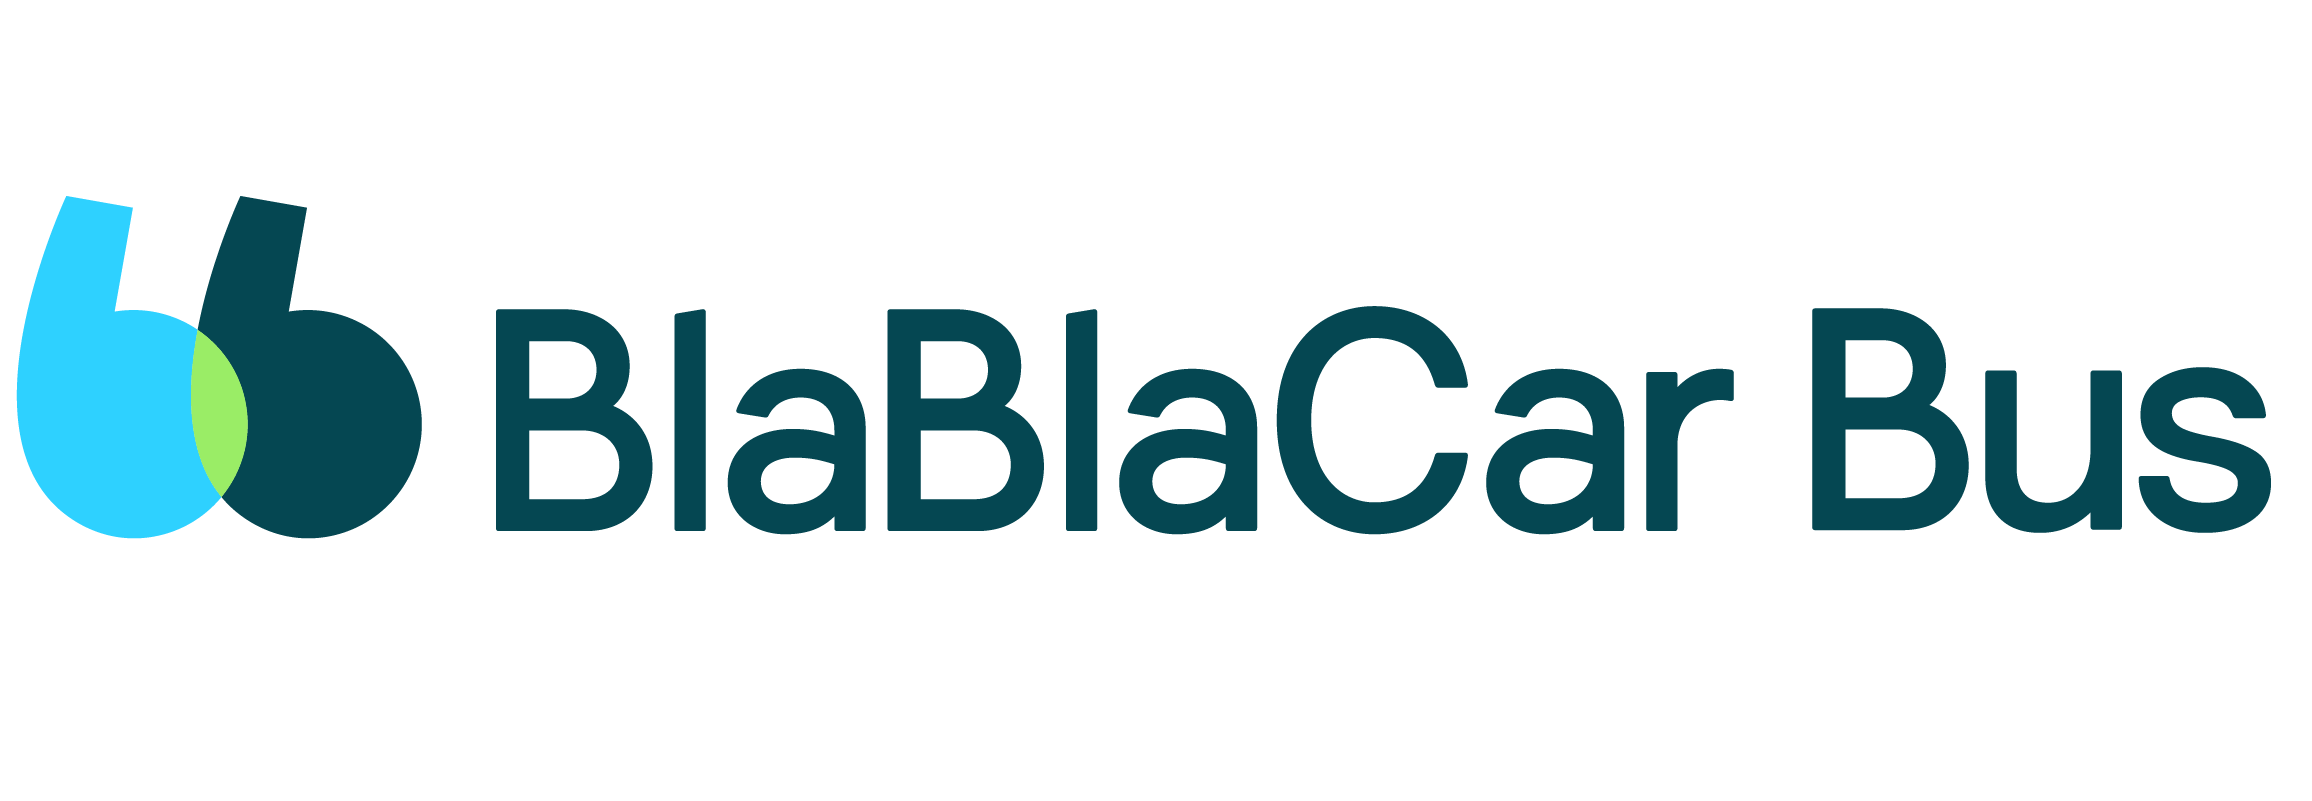 BlaBlaCar Bus logo